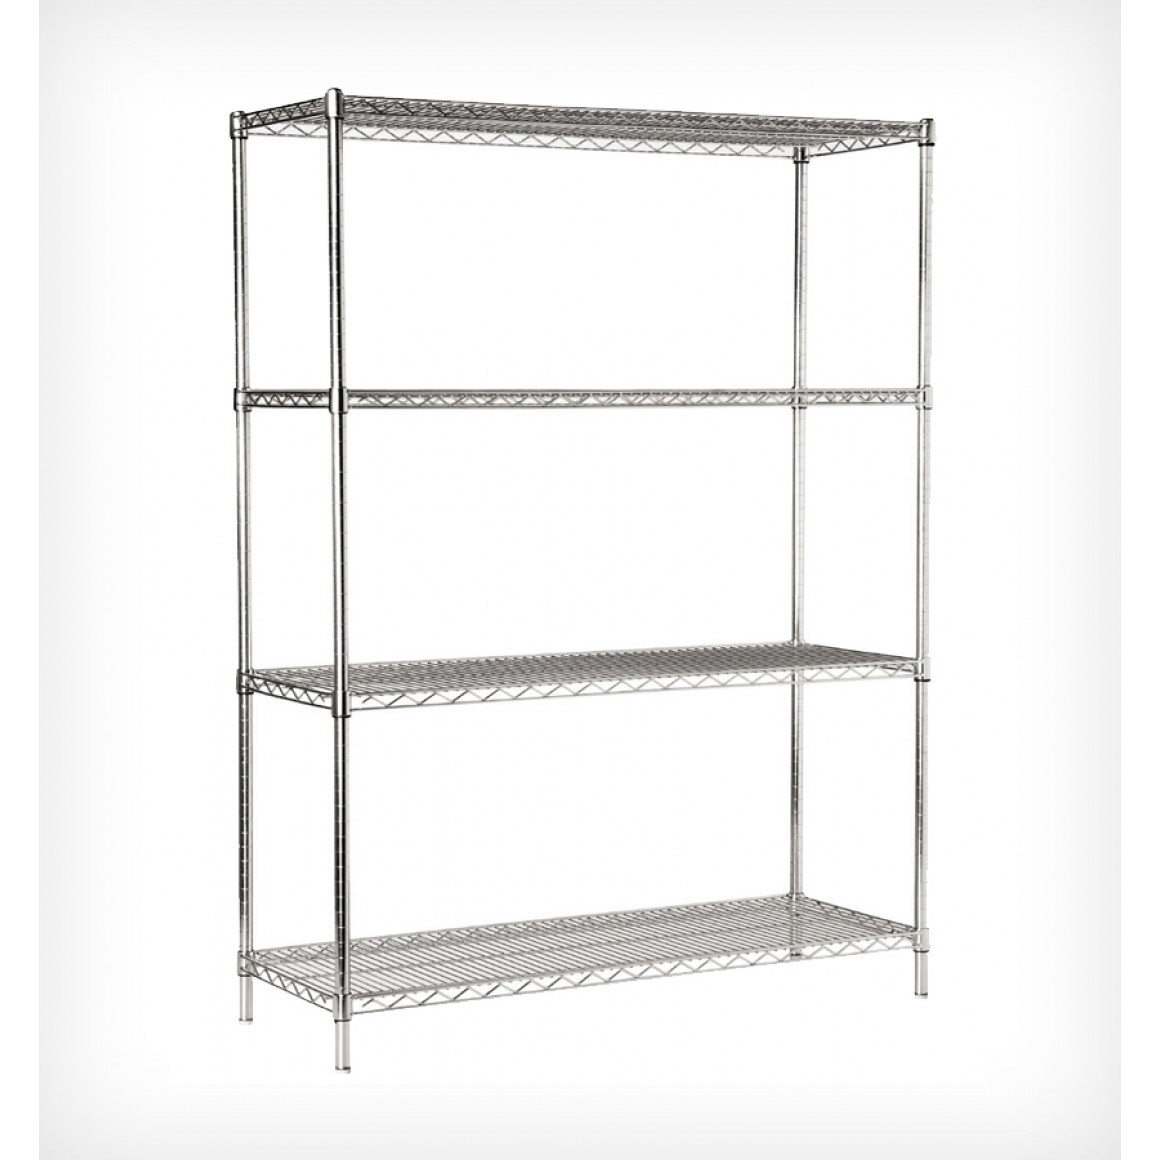 Storey Shelf perforated